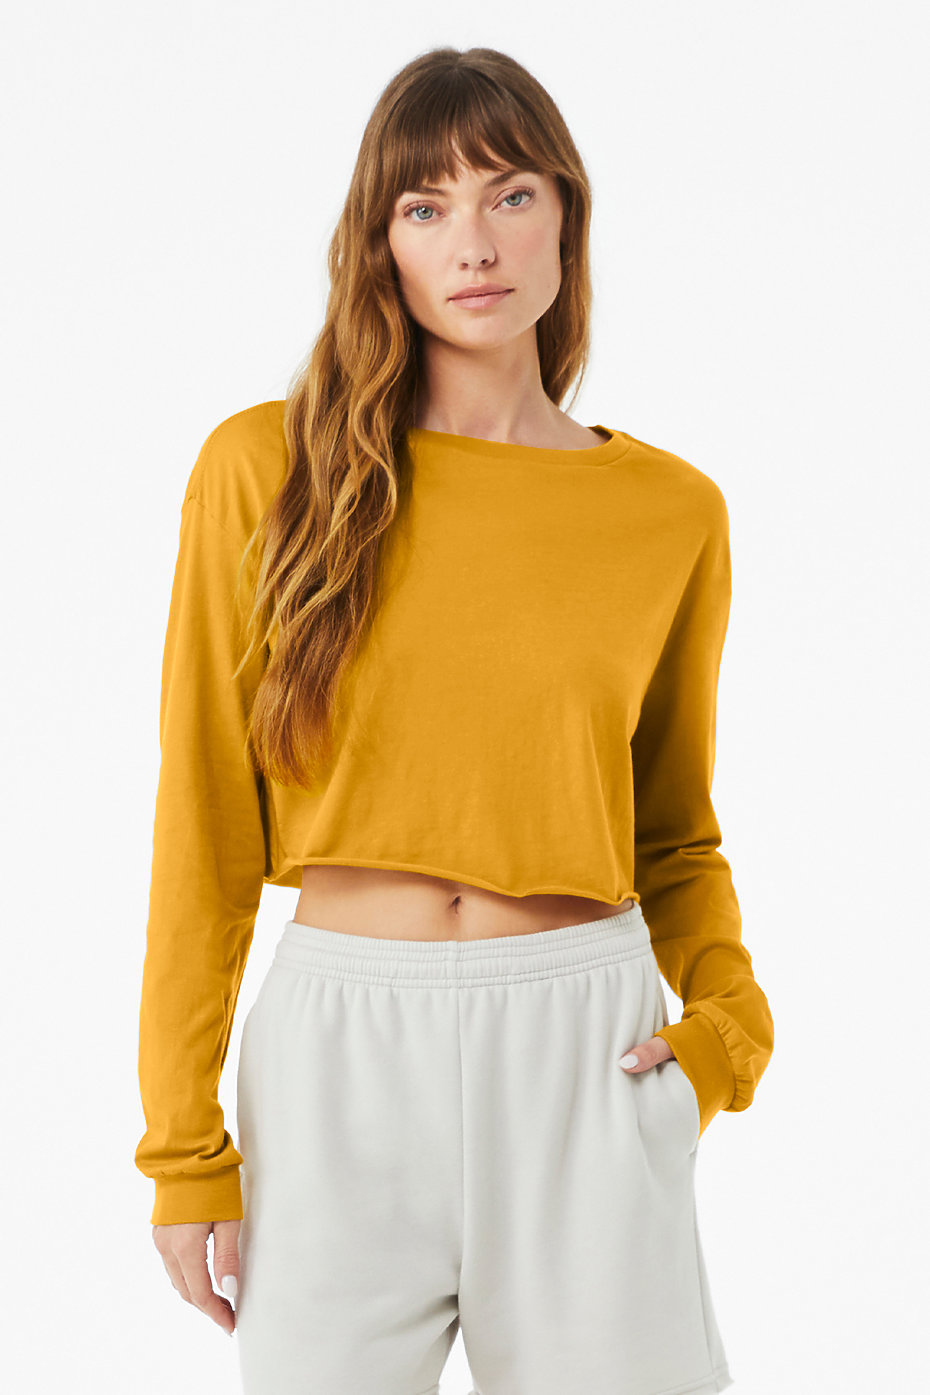 Long Sleeve Crop Top | Womens Wholesale Clothing | Blank Plain T Shirts ...